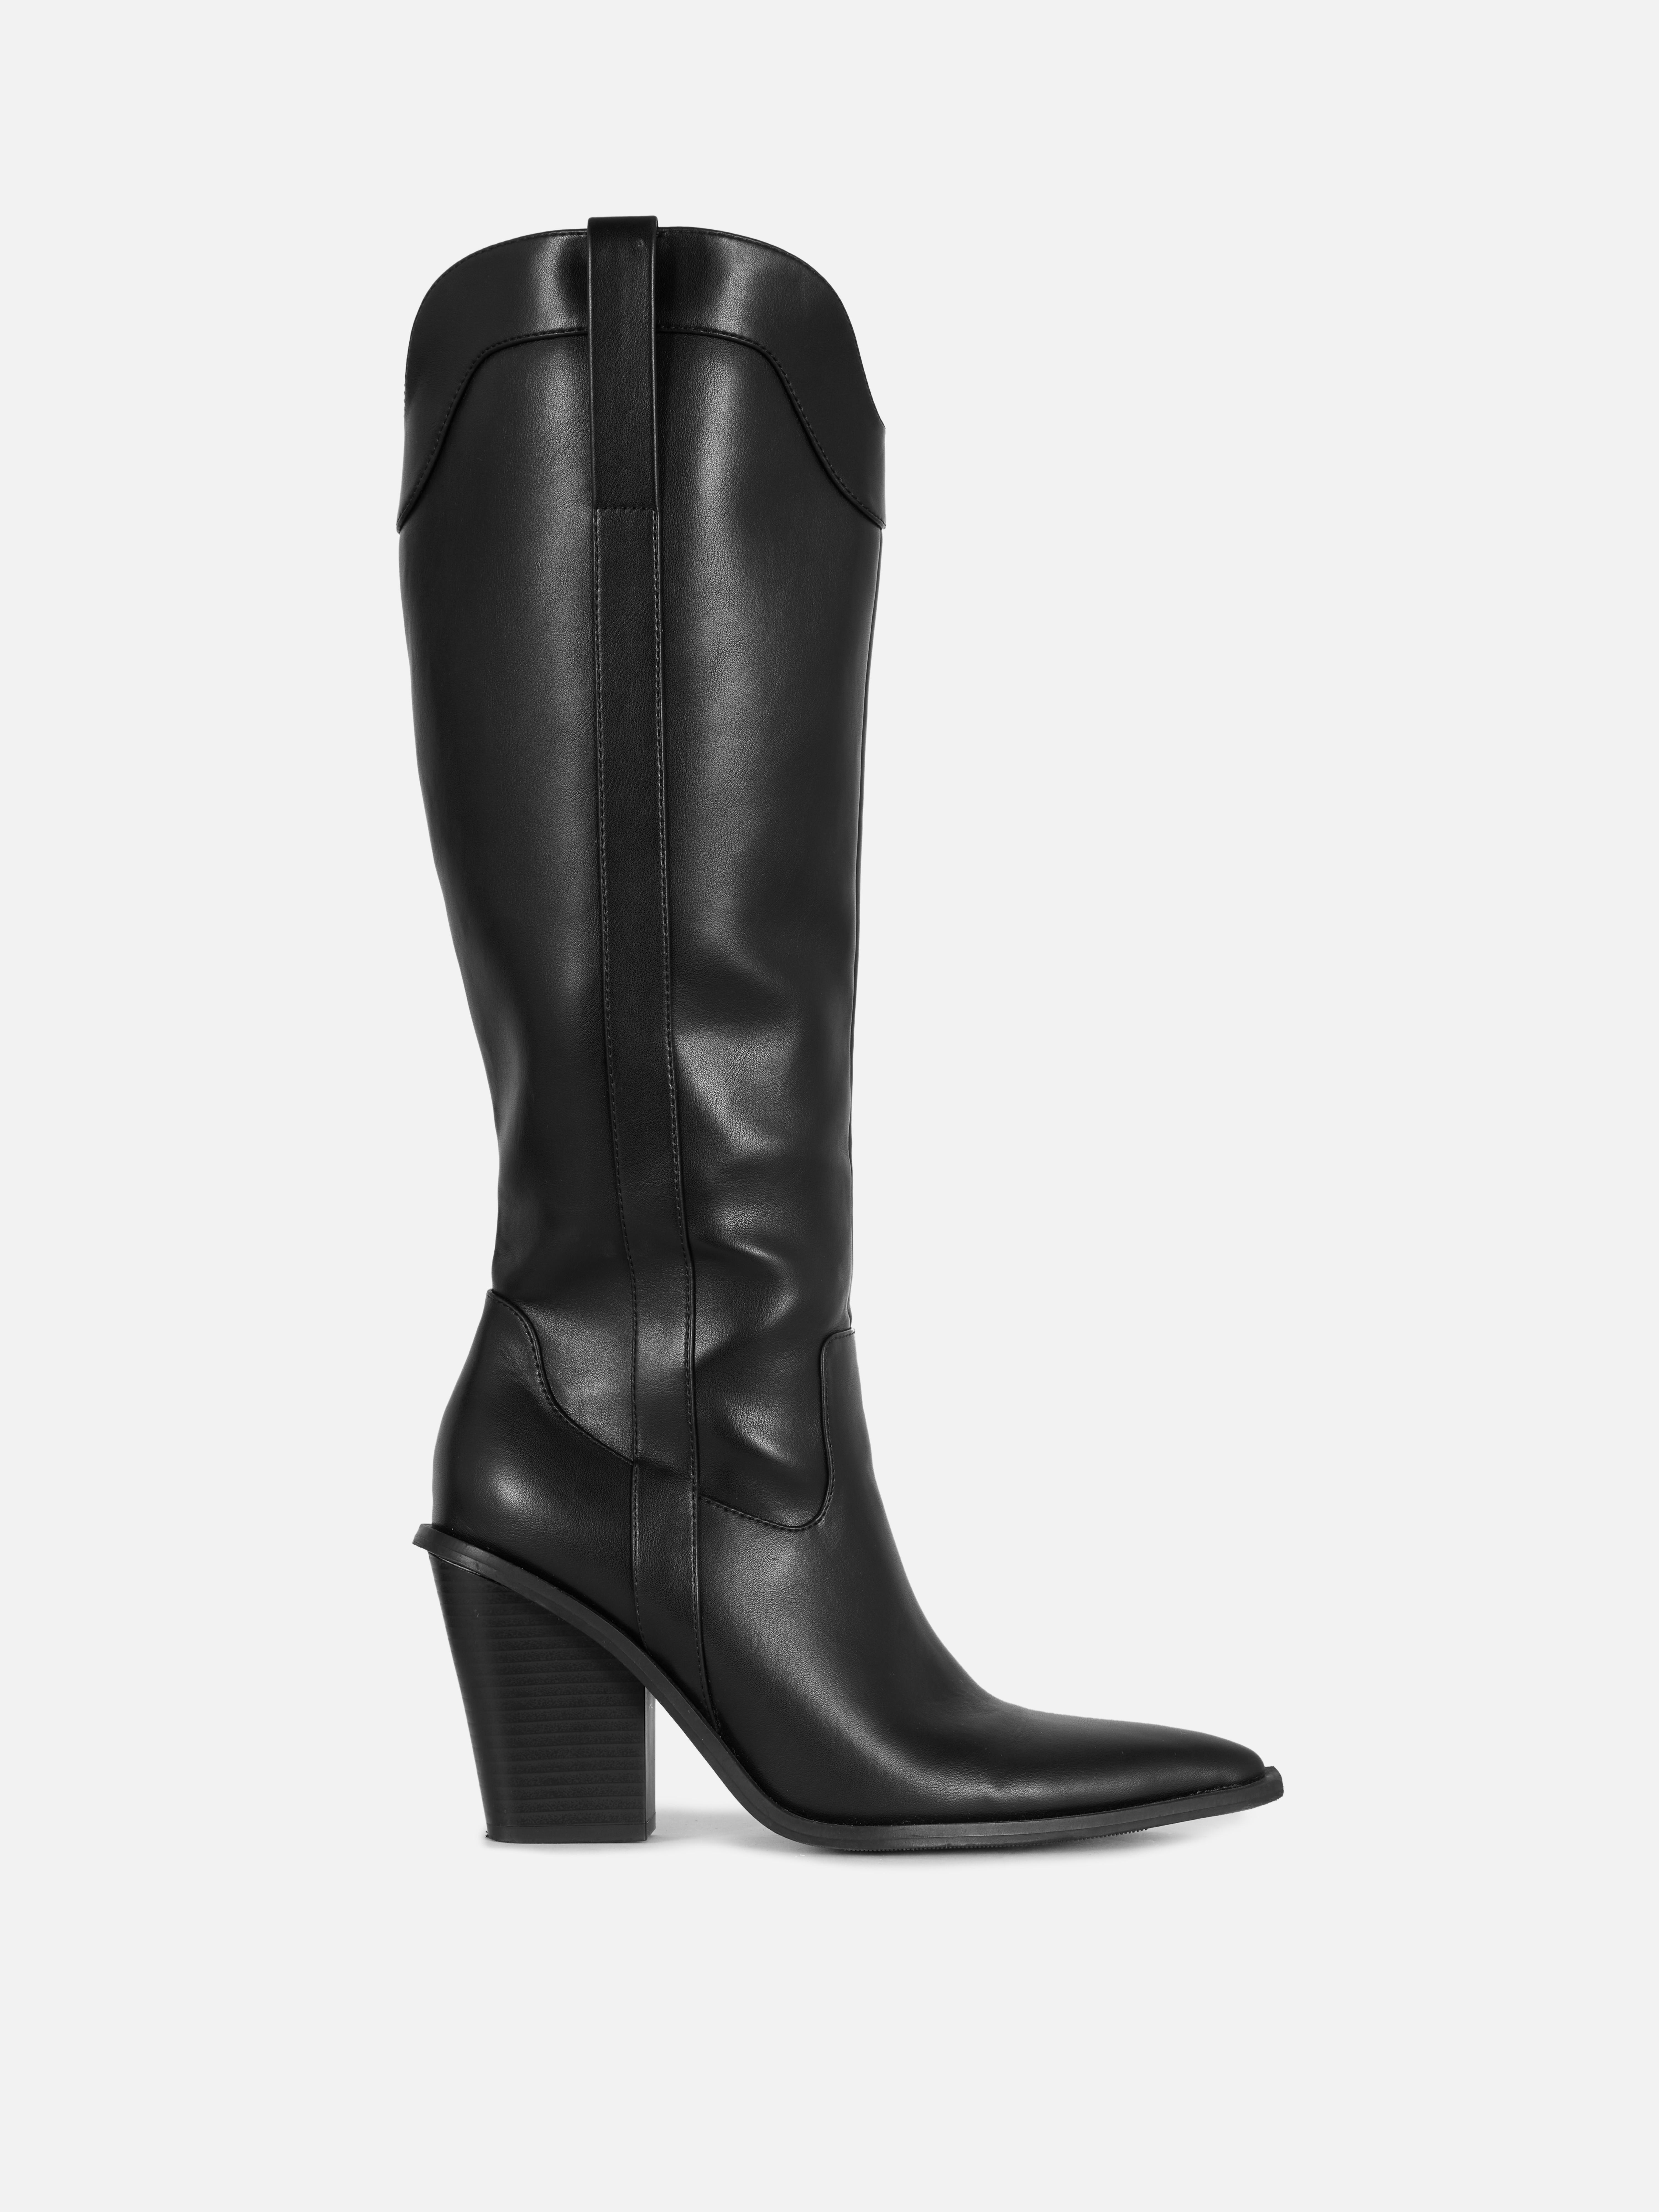 Rita Ora Faux Leather Cowboy Boots